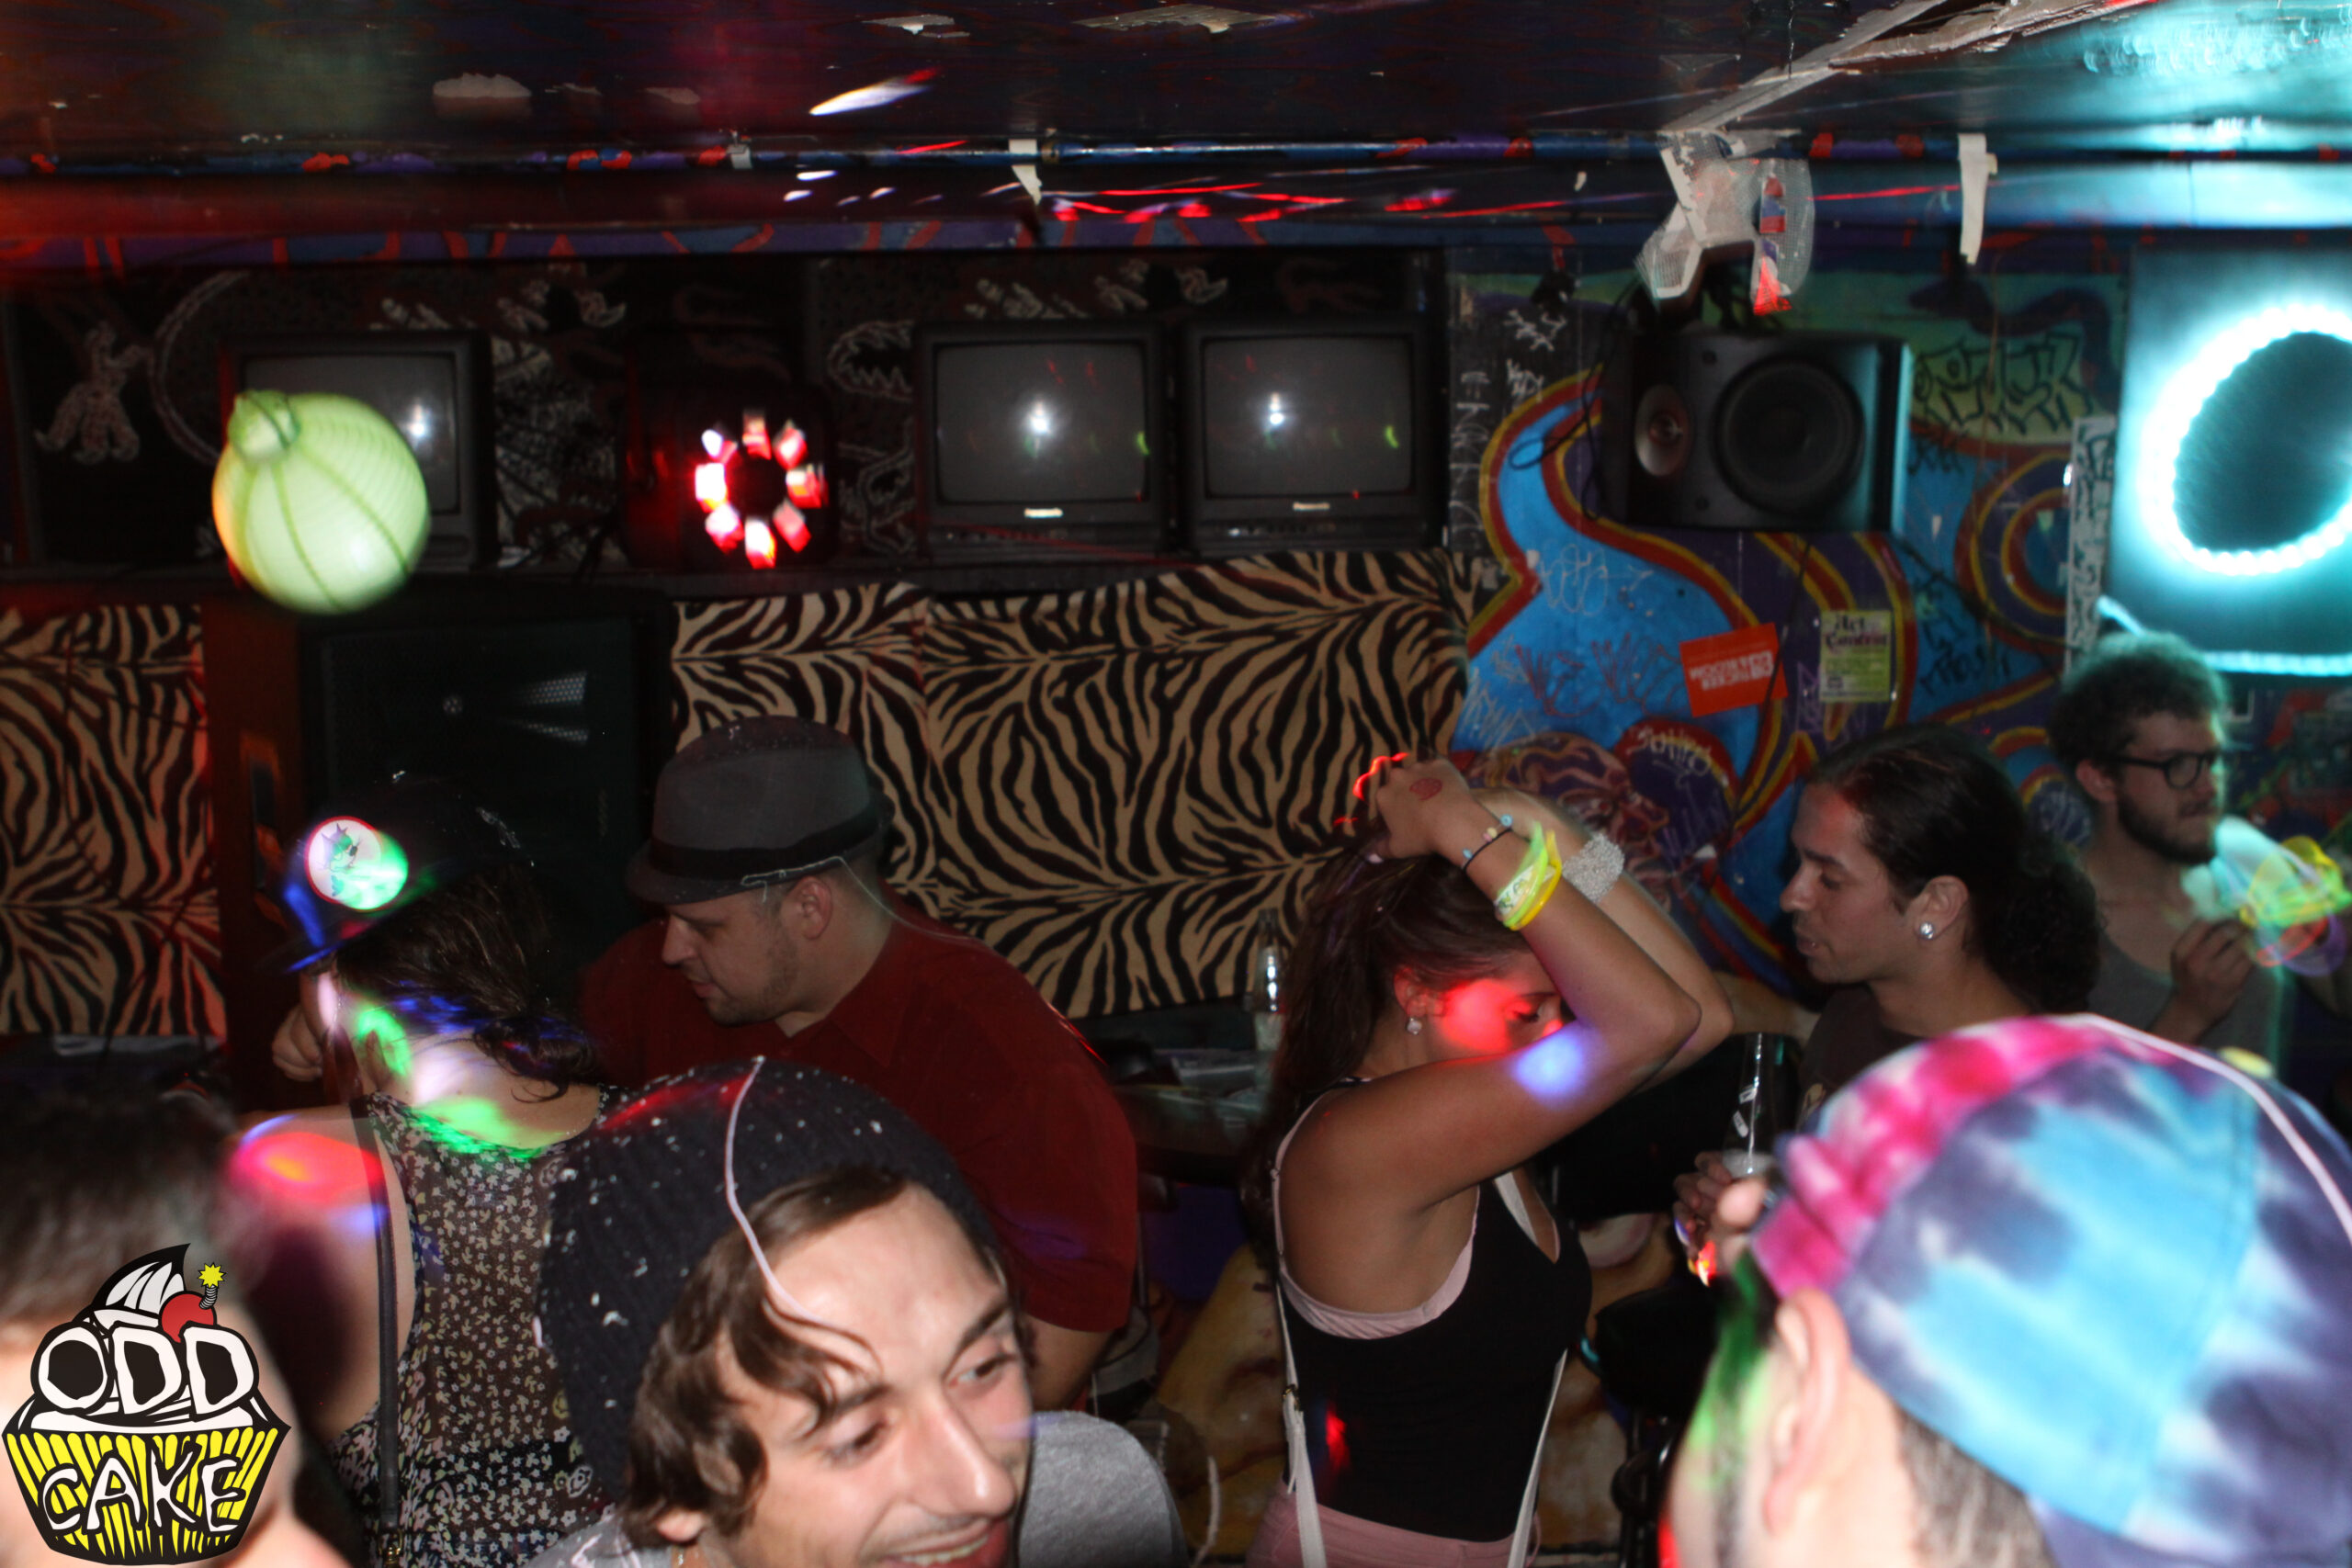 Img 1244 Oddcake Presents Digital Meltdown 07 21 2011 Medusa Lounge Philadelphia Pa Burning Man Rave Party Scaled, OddCake